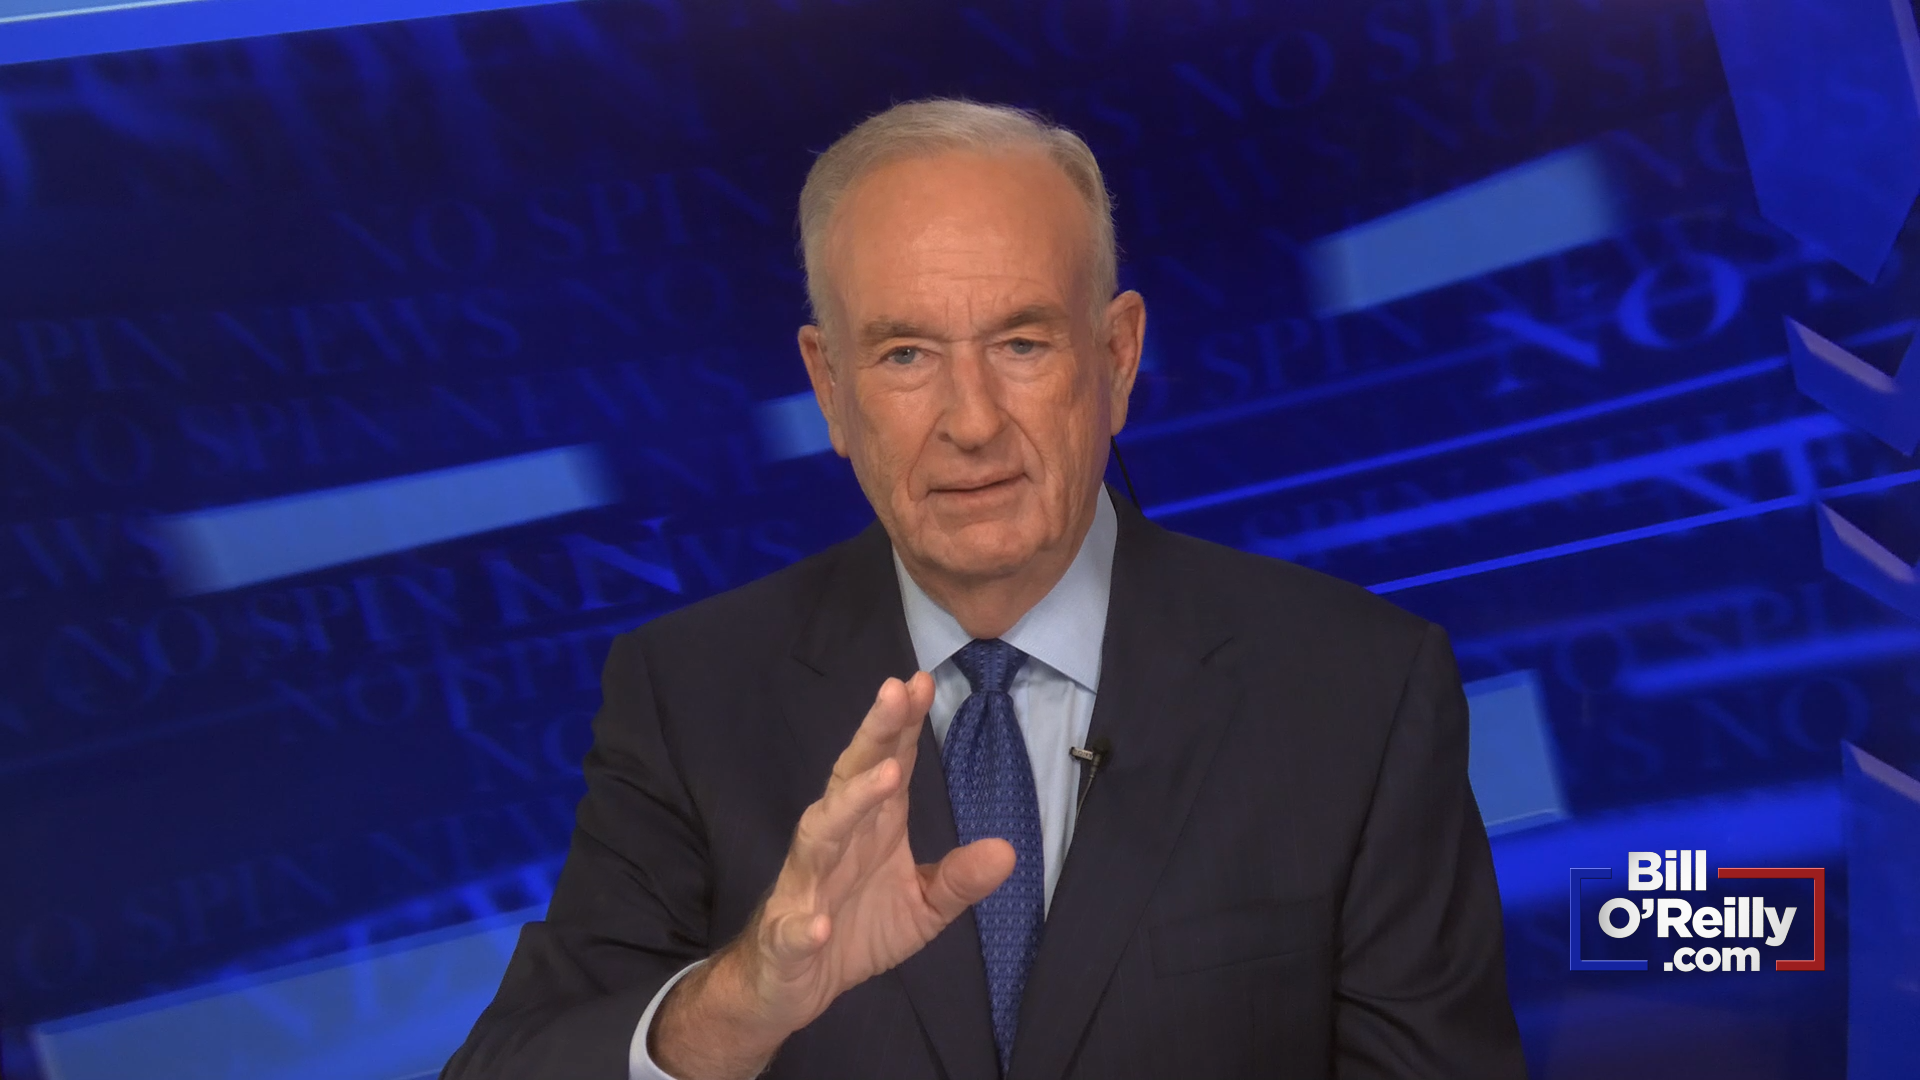 O'Reilly: 'Biden Has No Clue'